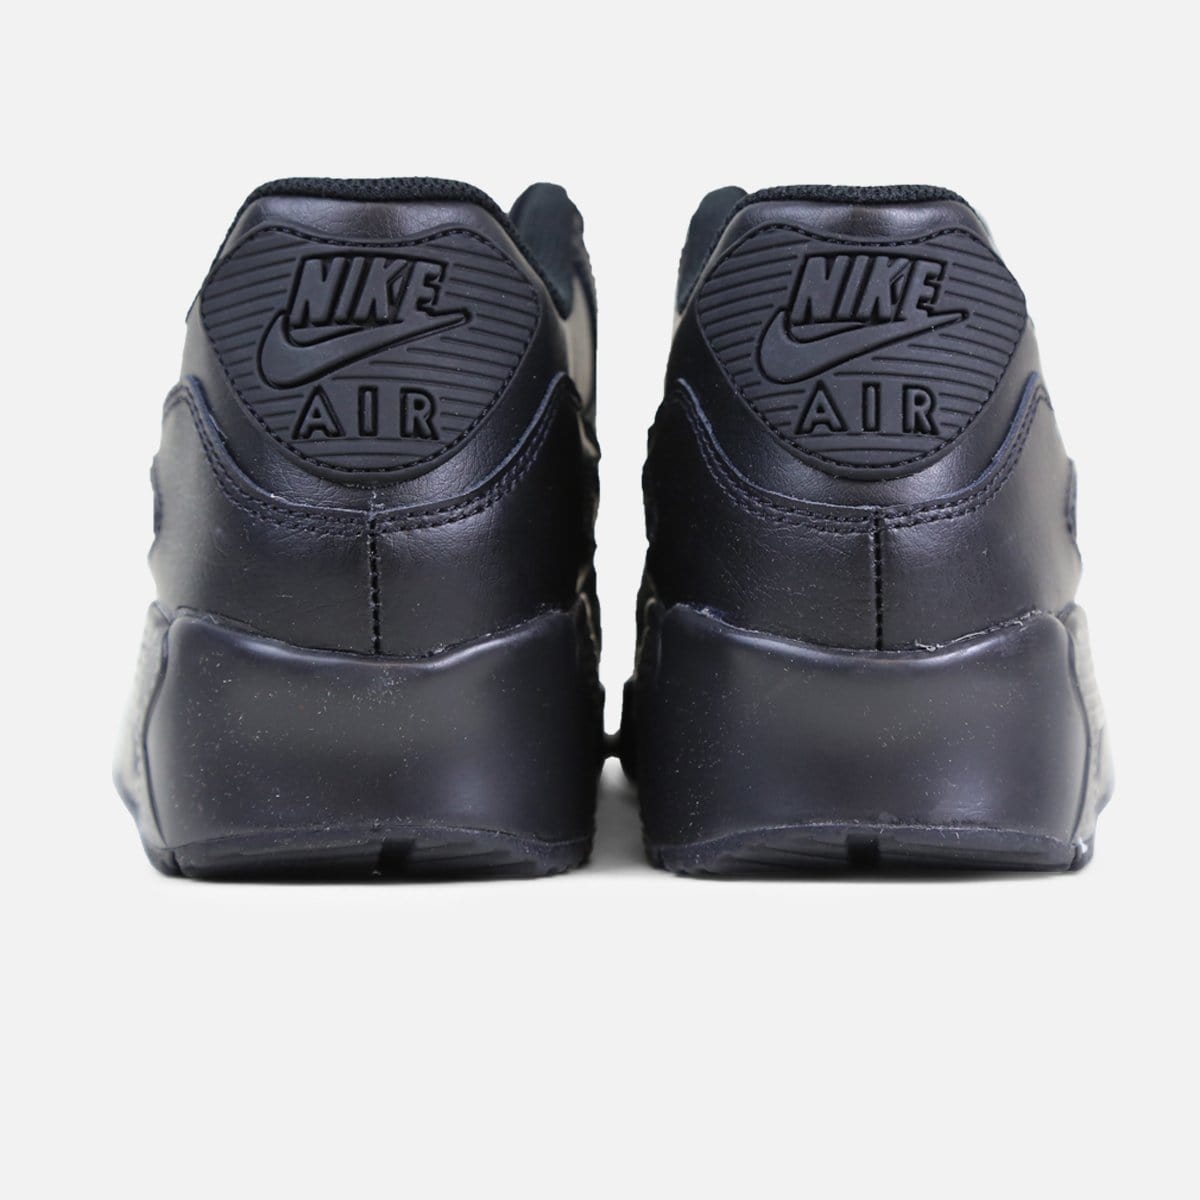 Nike Air Max 90 Leather Grade-School (Black/Black)